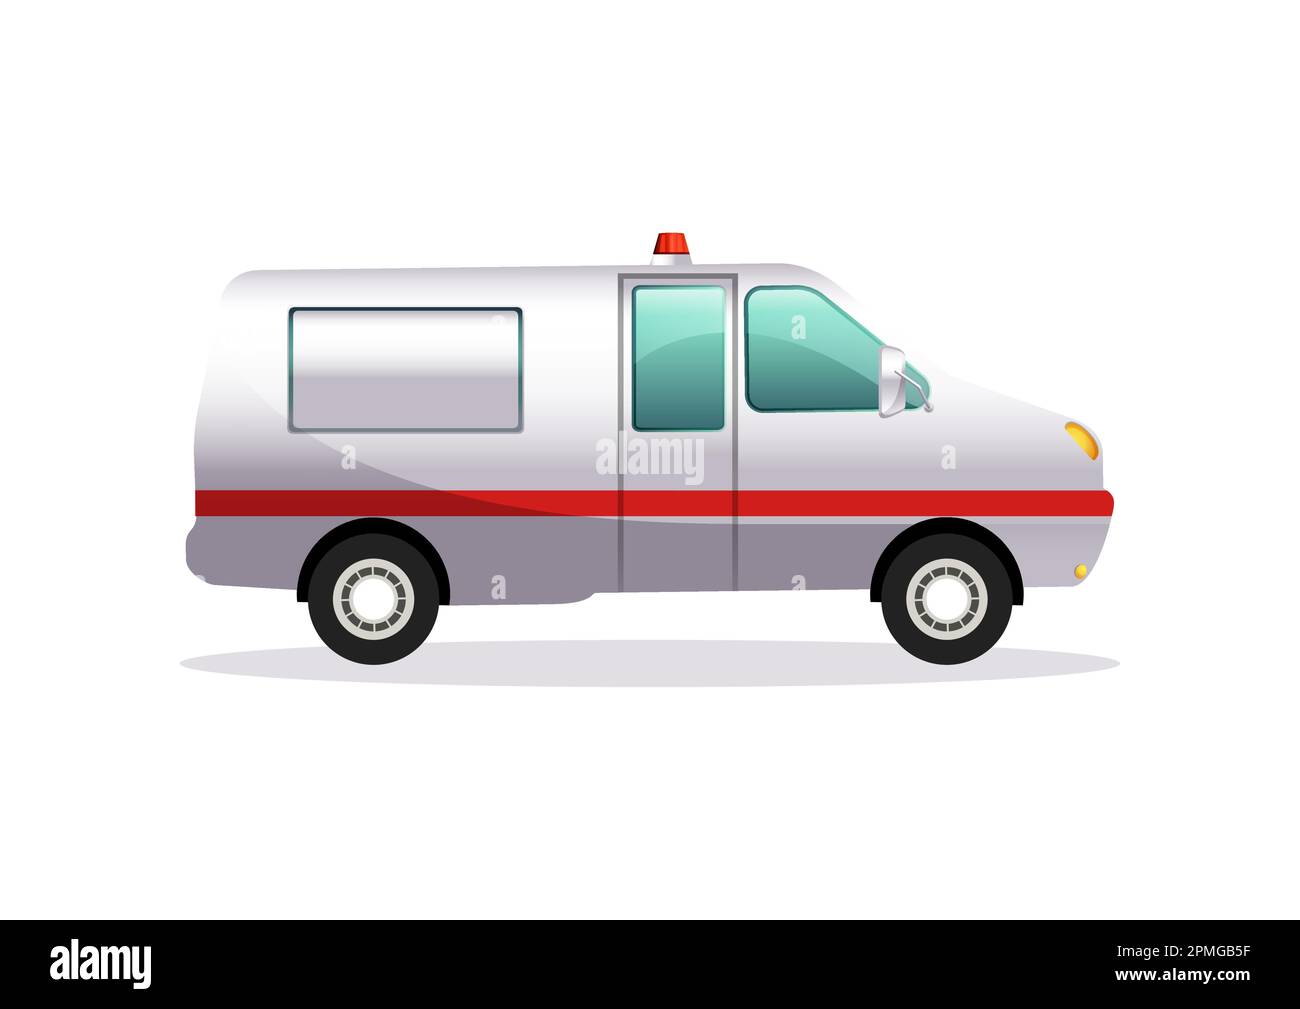 Ambulance Car In Flat Style Vector Stock Vector Image & Art - Alamy